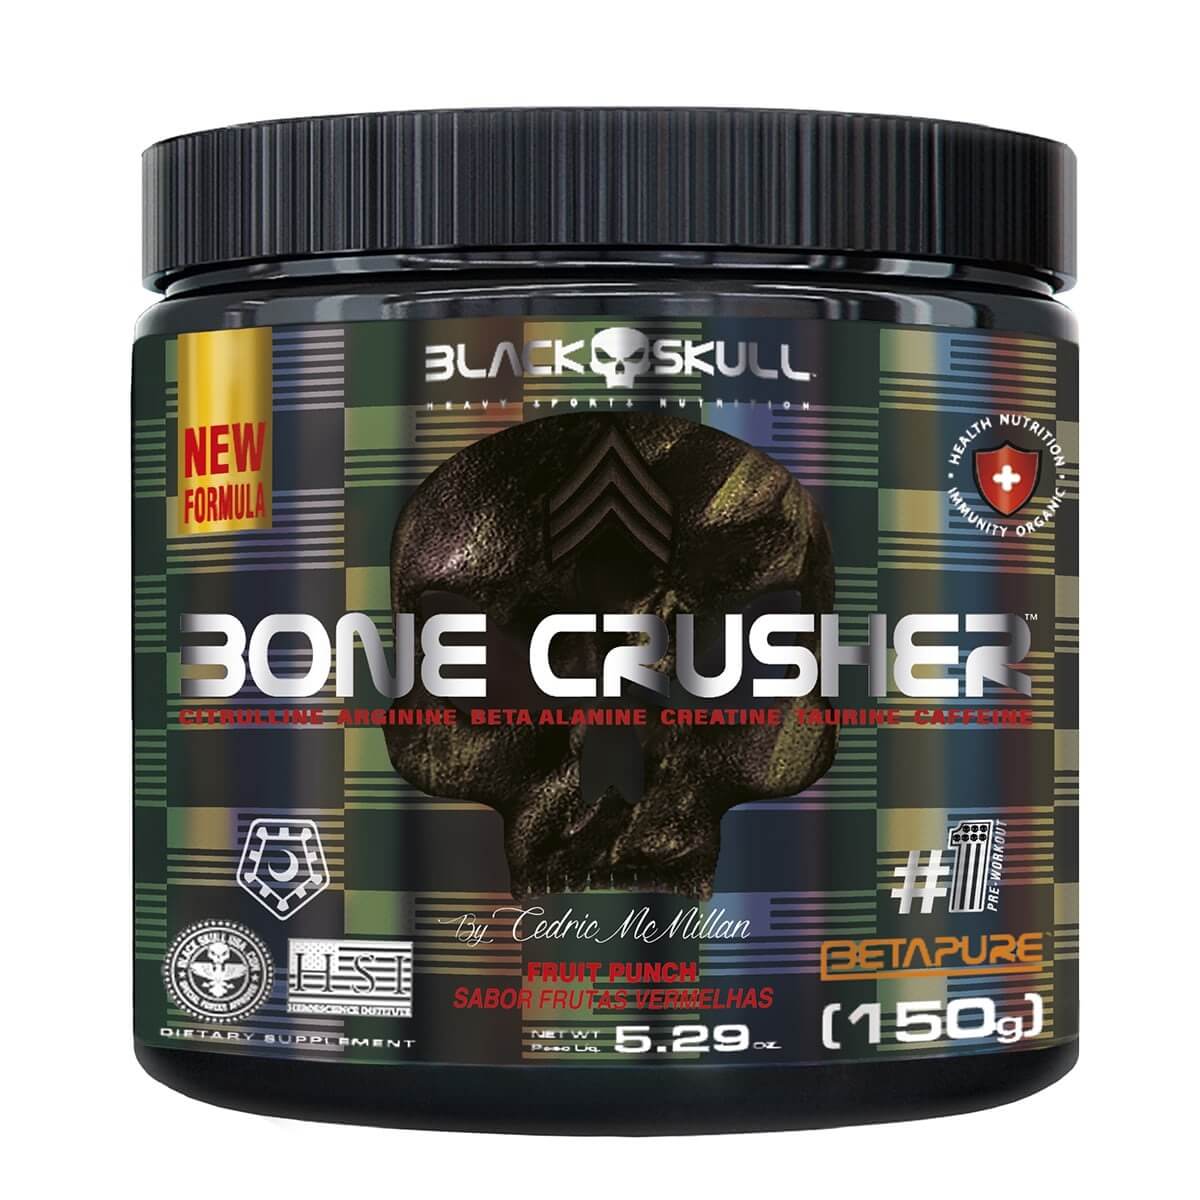 Bone Crusher BETAPURE New Formula Black Skull - 150g